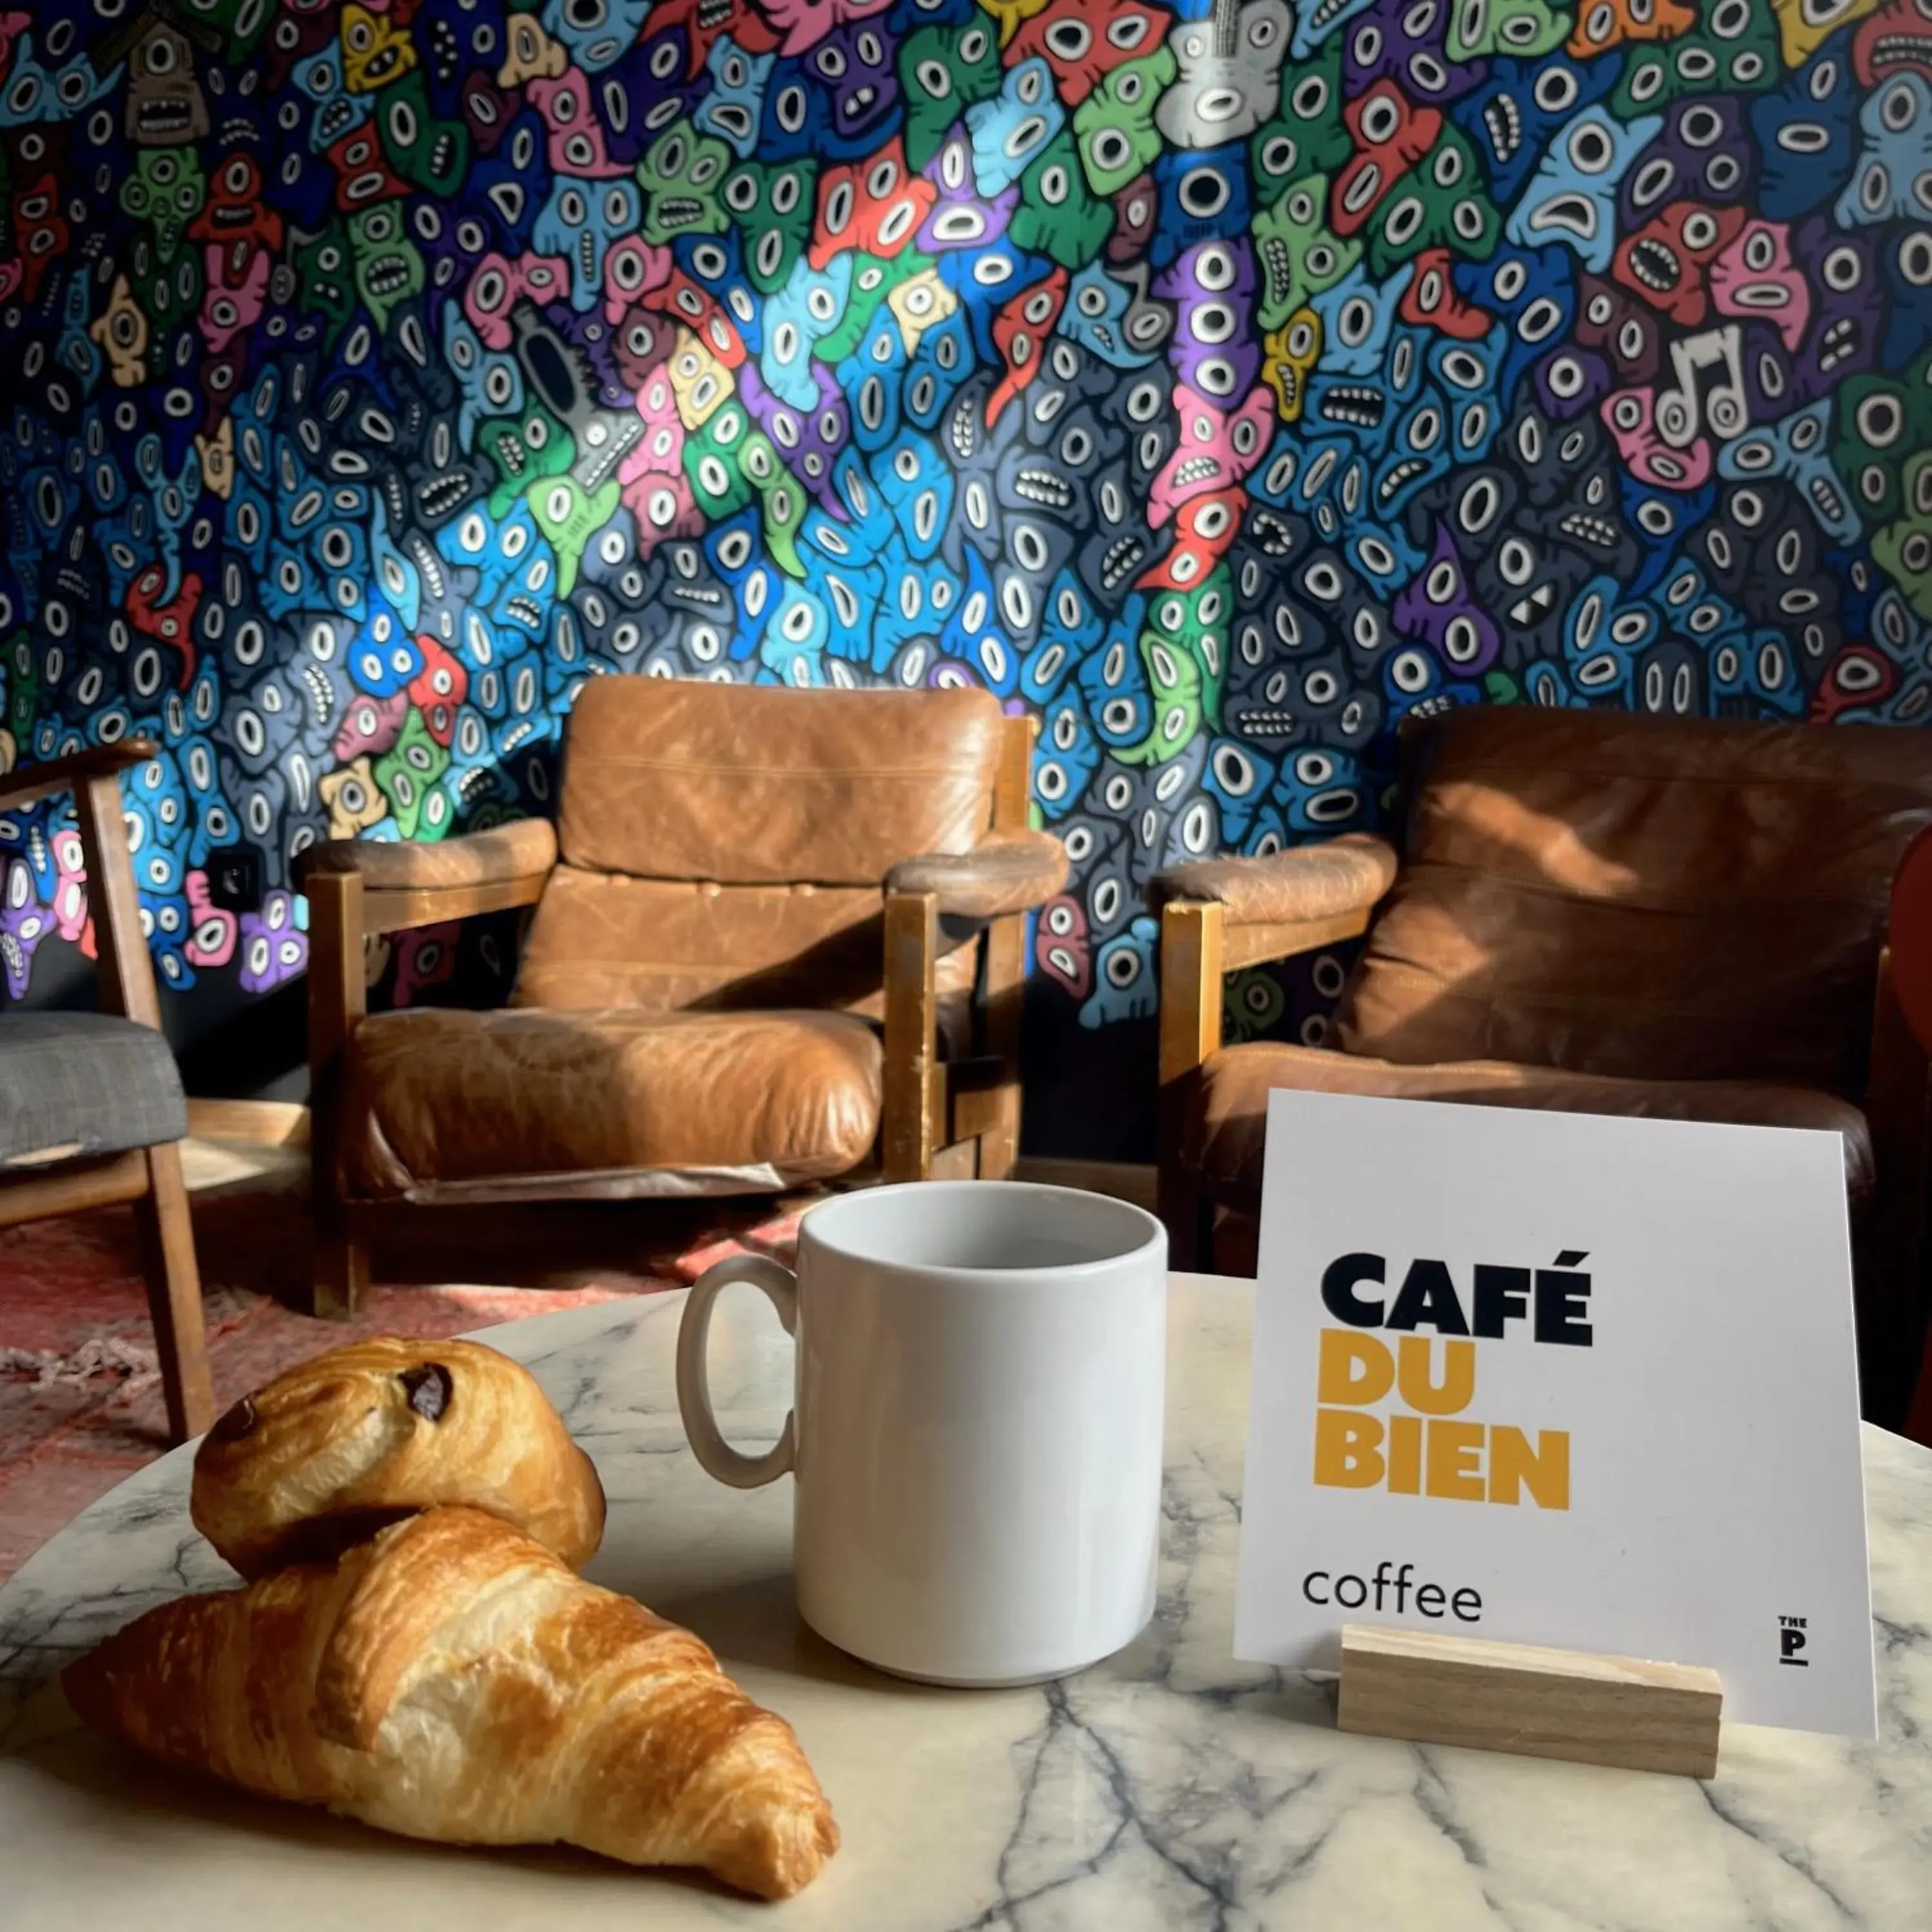 Continental breakfast in The People - Paris Belleville IEx Les PiaulesI